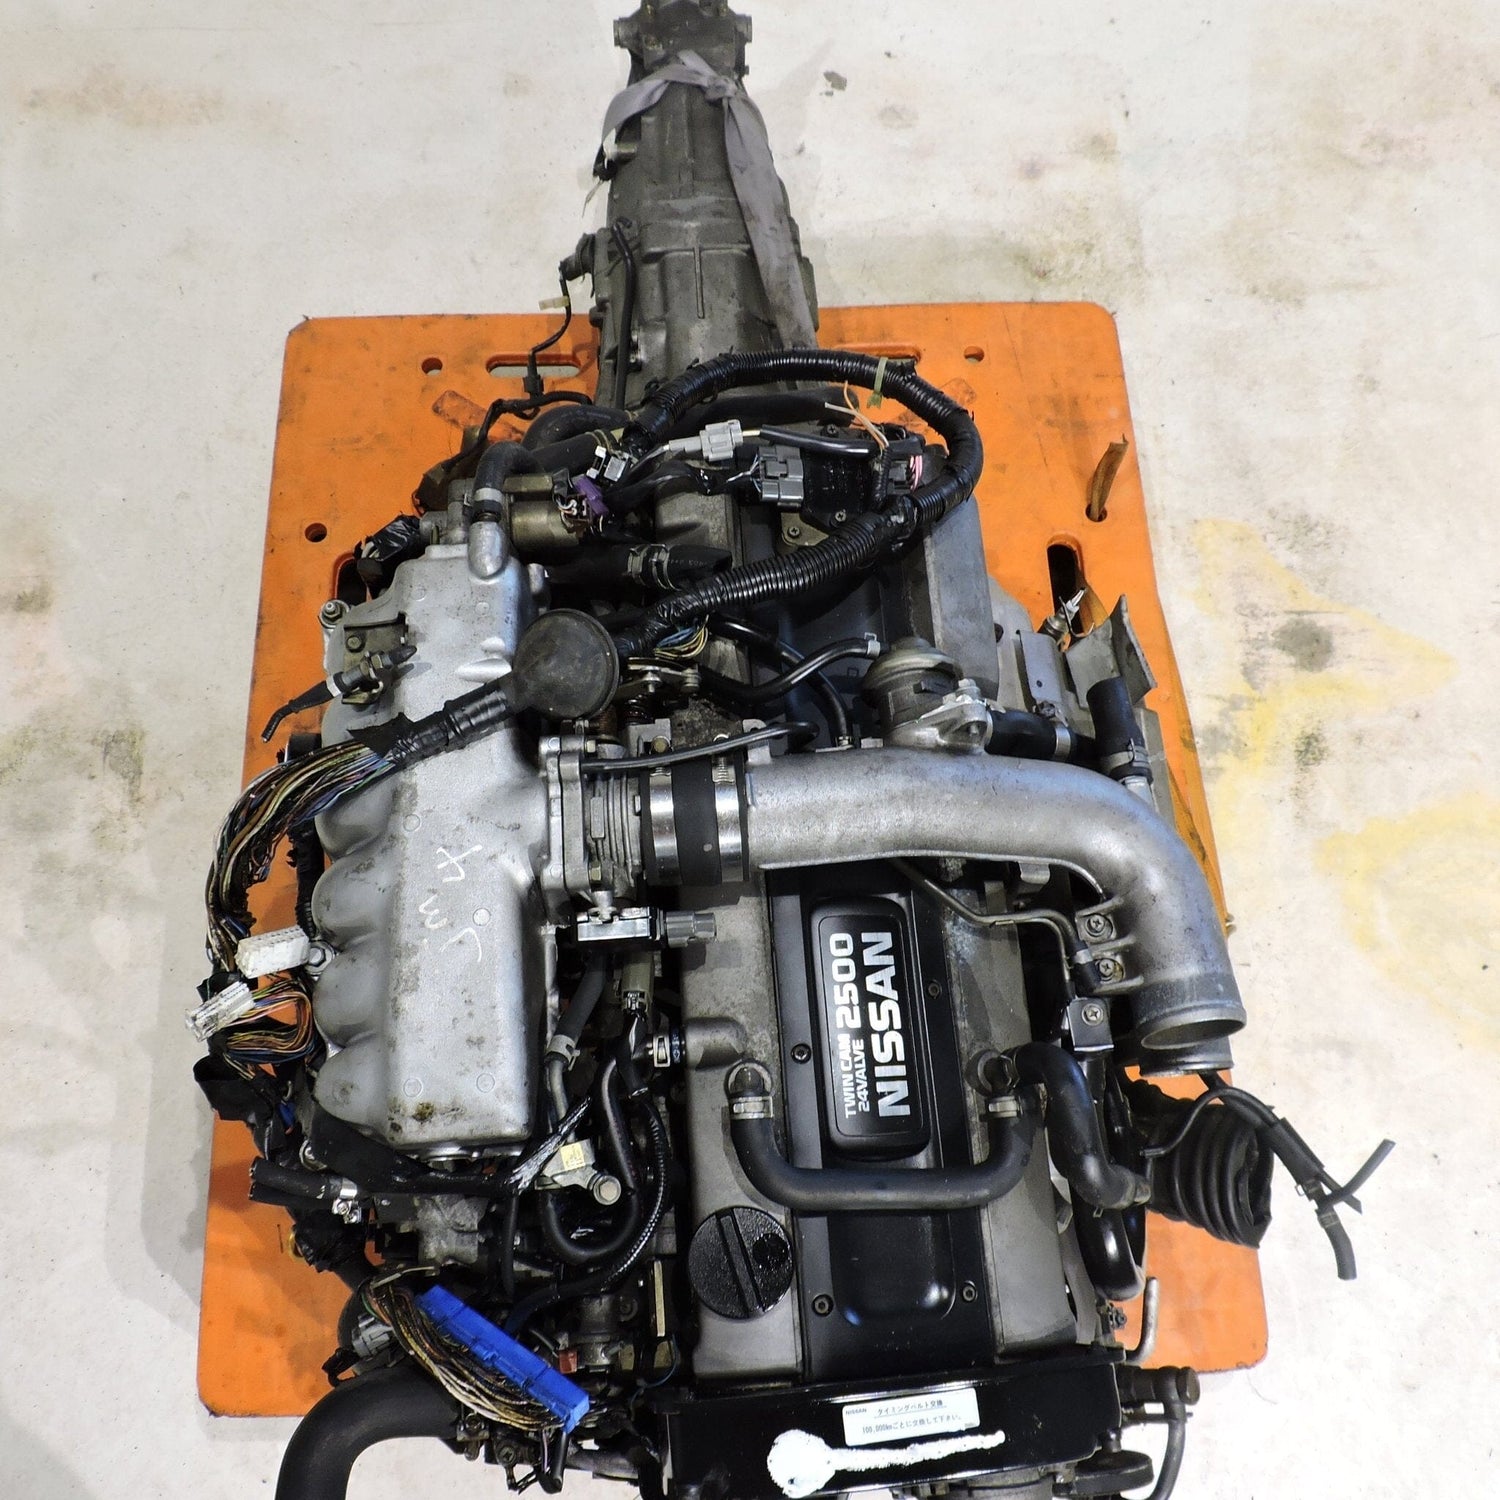 Nissan Skyline Non-Neo Vvl Turbo 2.5l Rwd Jdm Engine Transmission Manual 5 Speed - RB25det Series 1